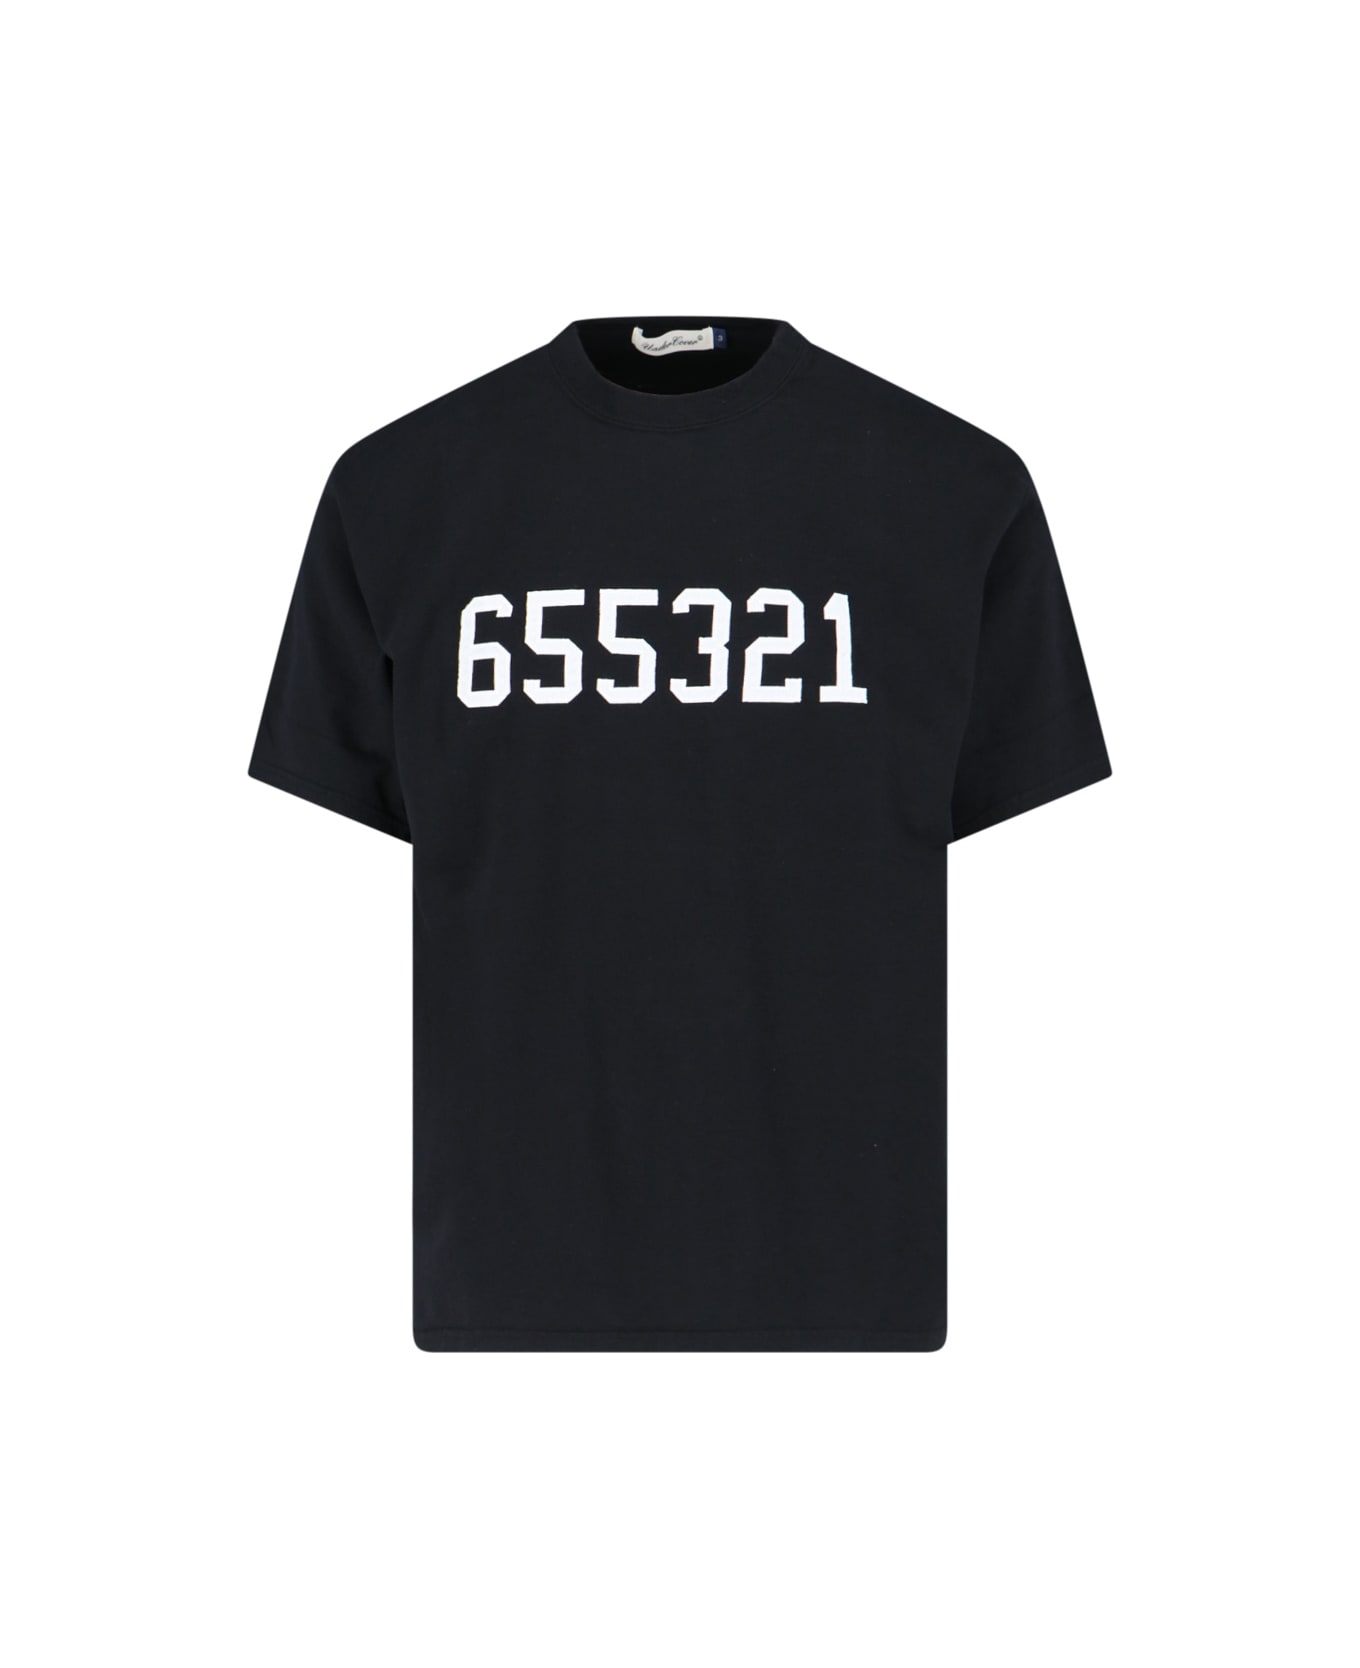 Undercover Jun Takahashi '655321' T-shirt - Black  